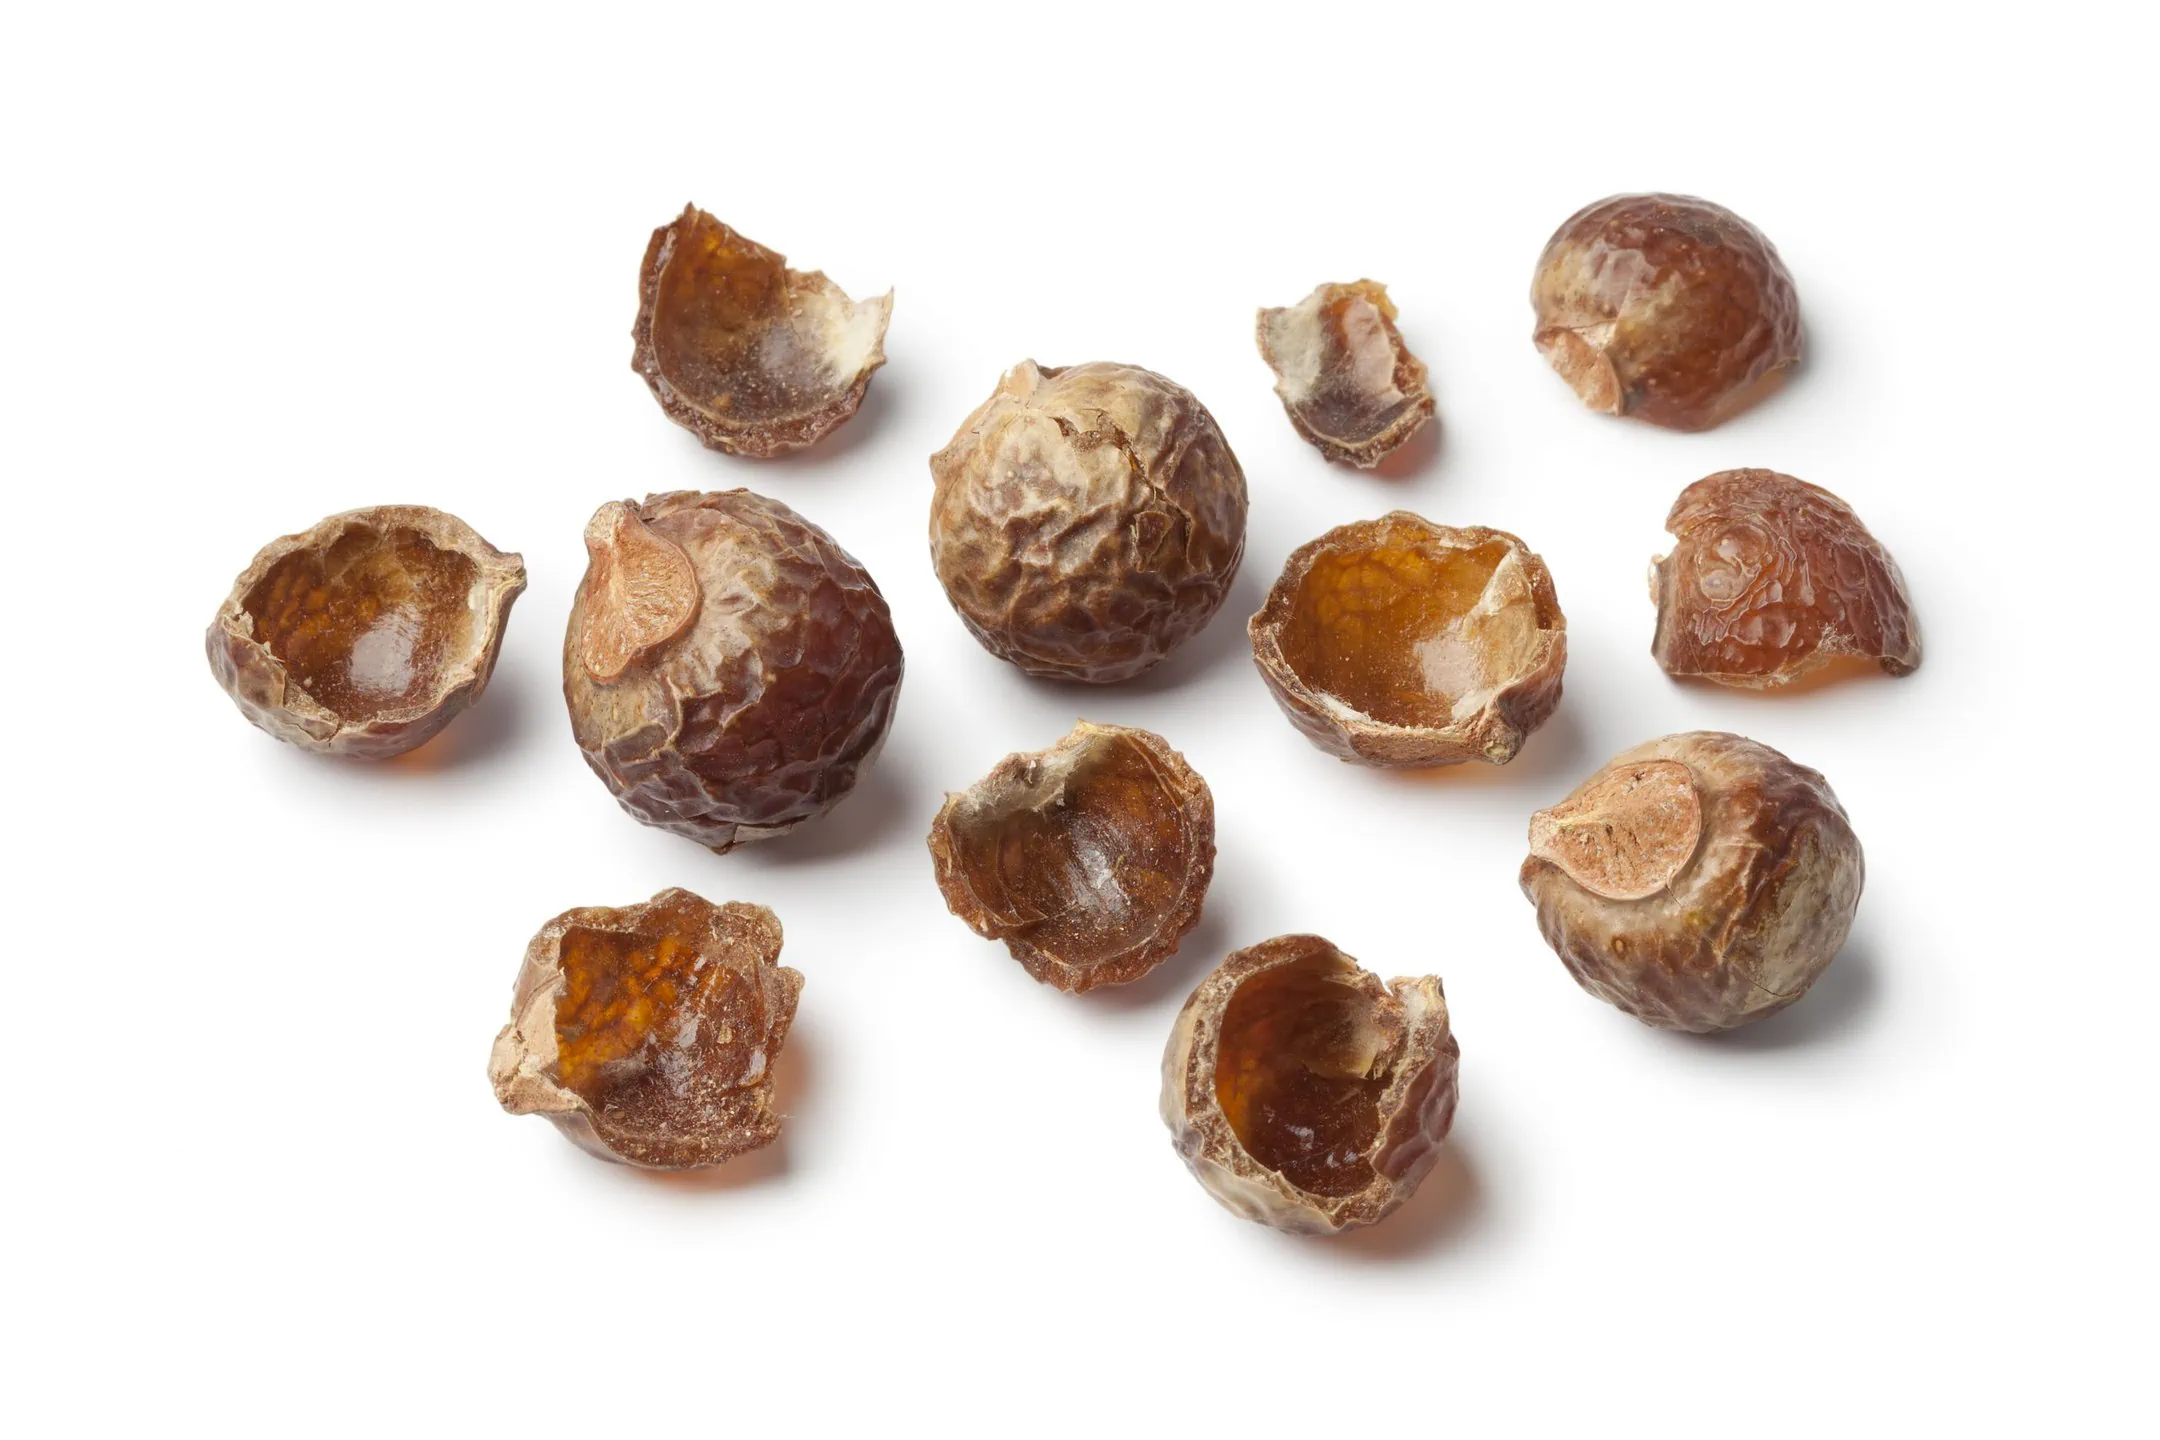 Nutshells of dried soapnuts